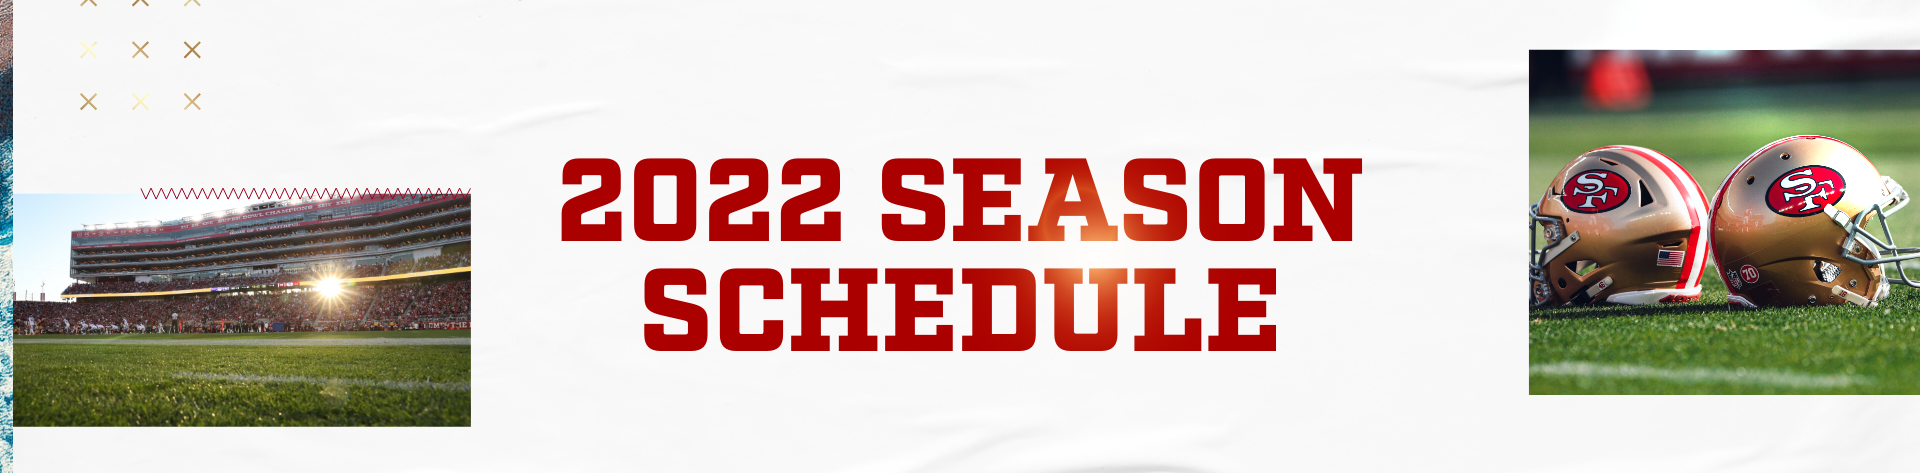 49ers schedule san francisco 49ers 49ers com